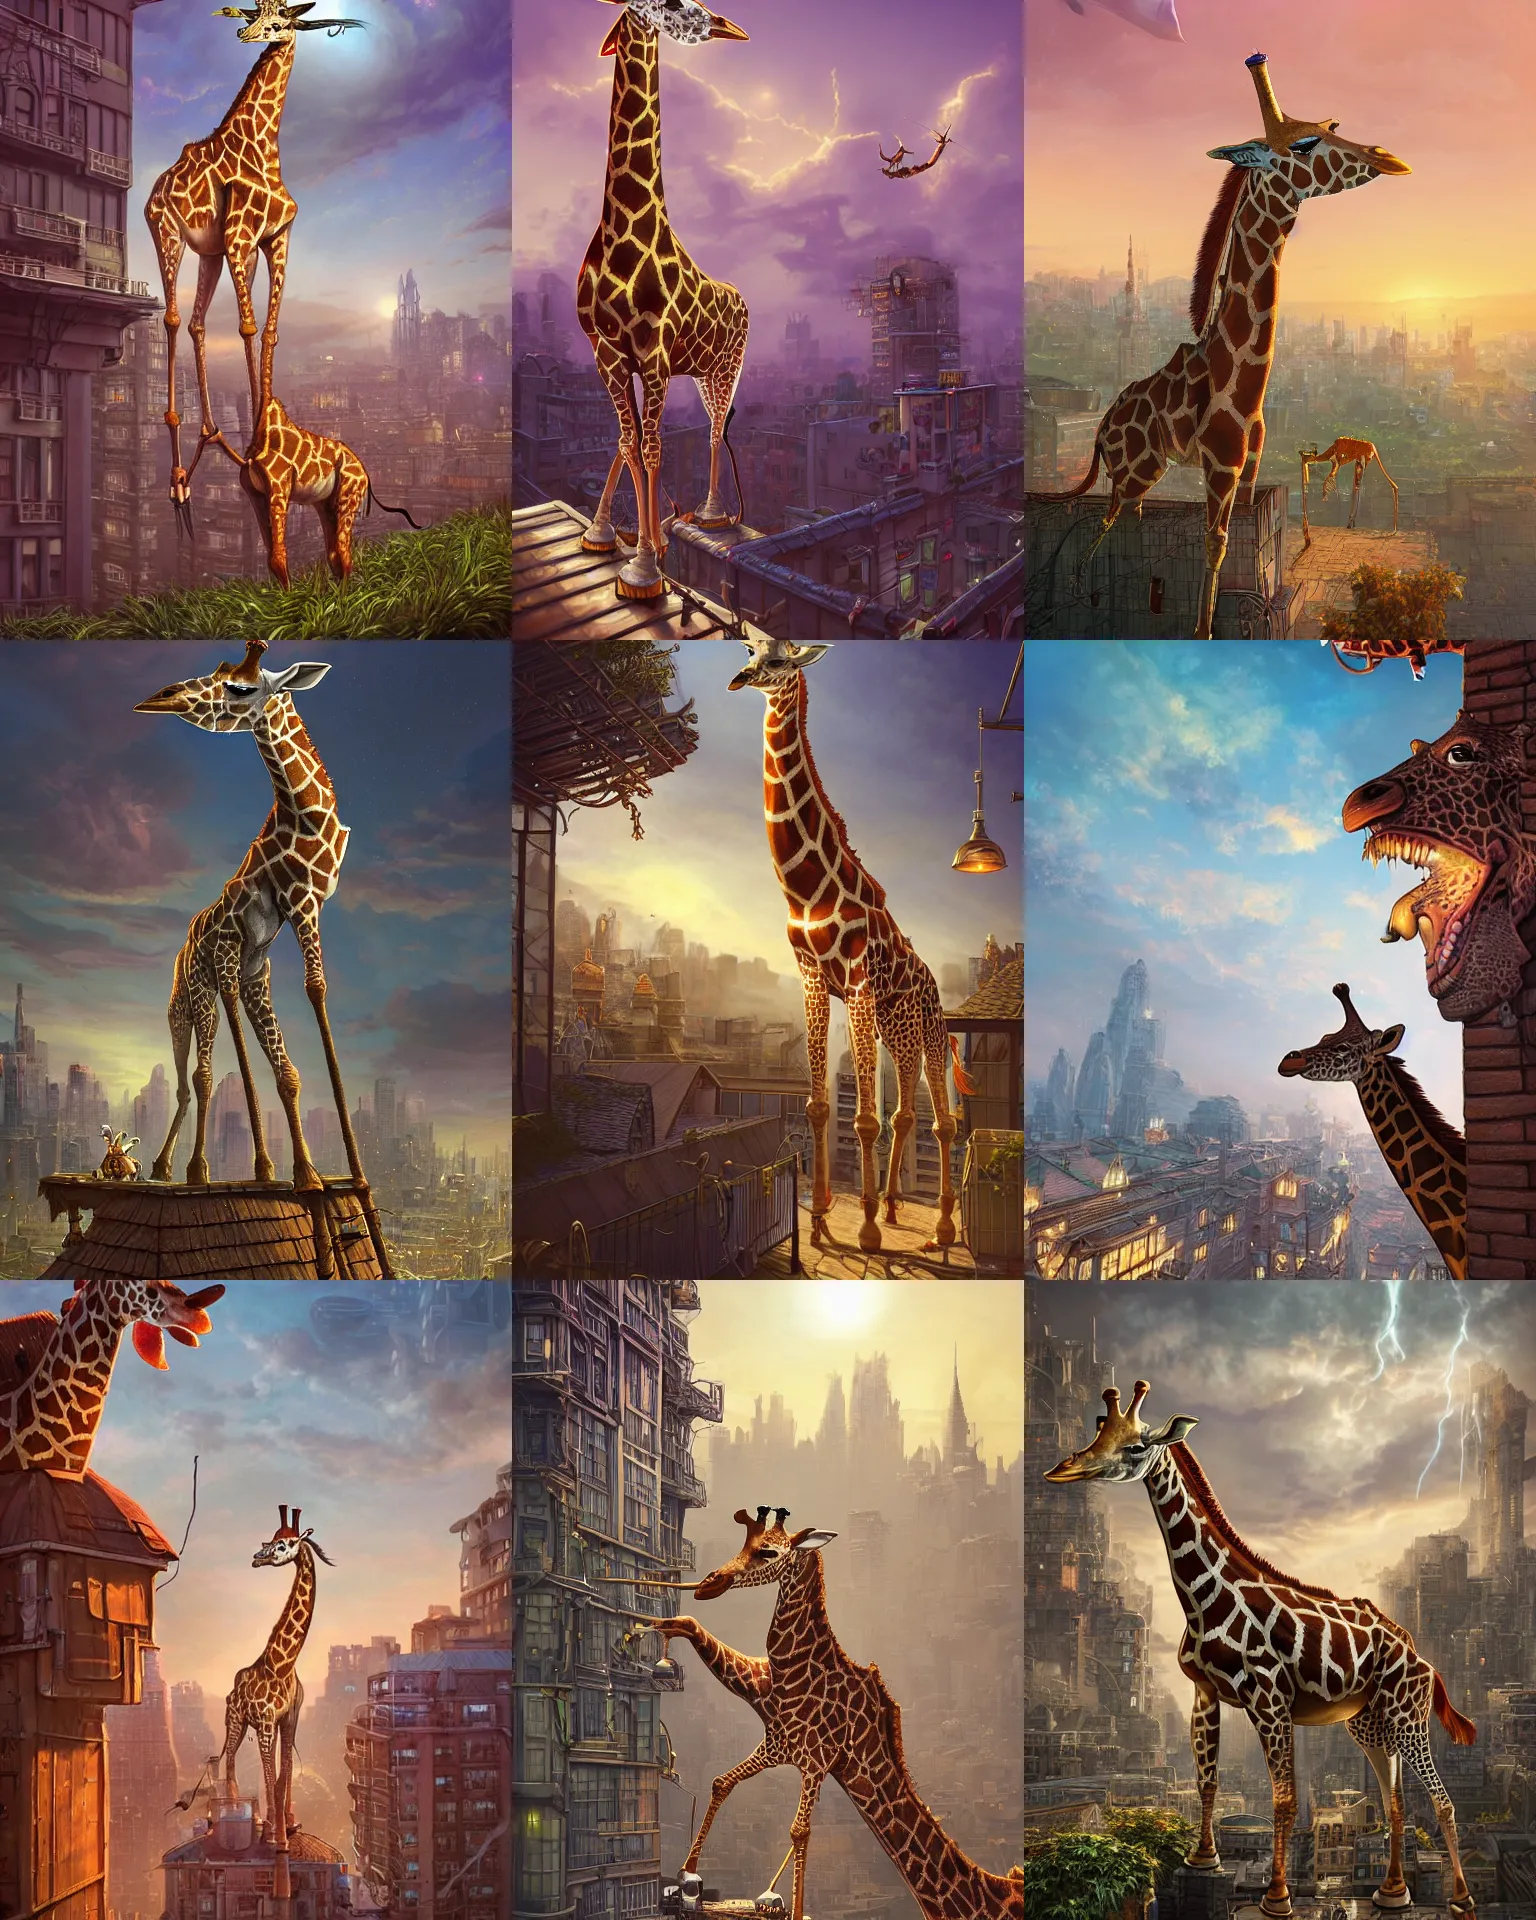 Prompt: kids fantasy sketch giraffe on rooftop, fantasy, intricate, epic lighting, cinematic composition, hyper realistic, 8 k resolution, unreal engine 5, by artgerm, tooth wu, dan mumford, beeple, wlop, rossdraws, james jean, marc simonetti, artstation